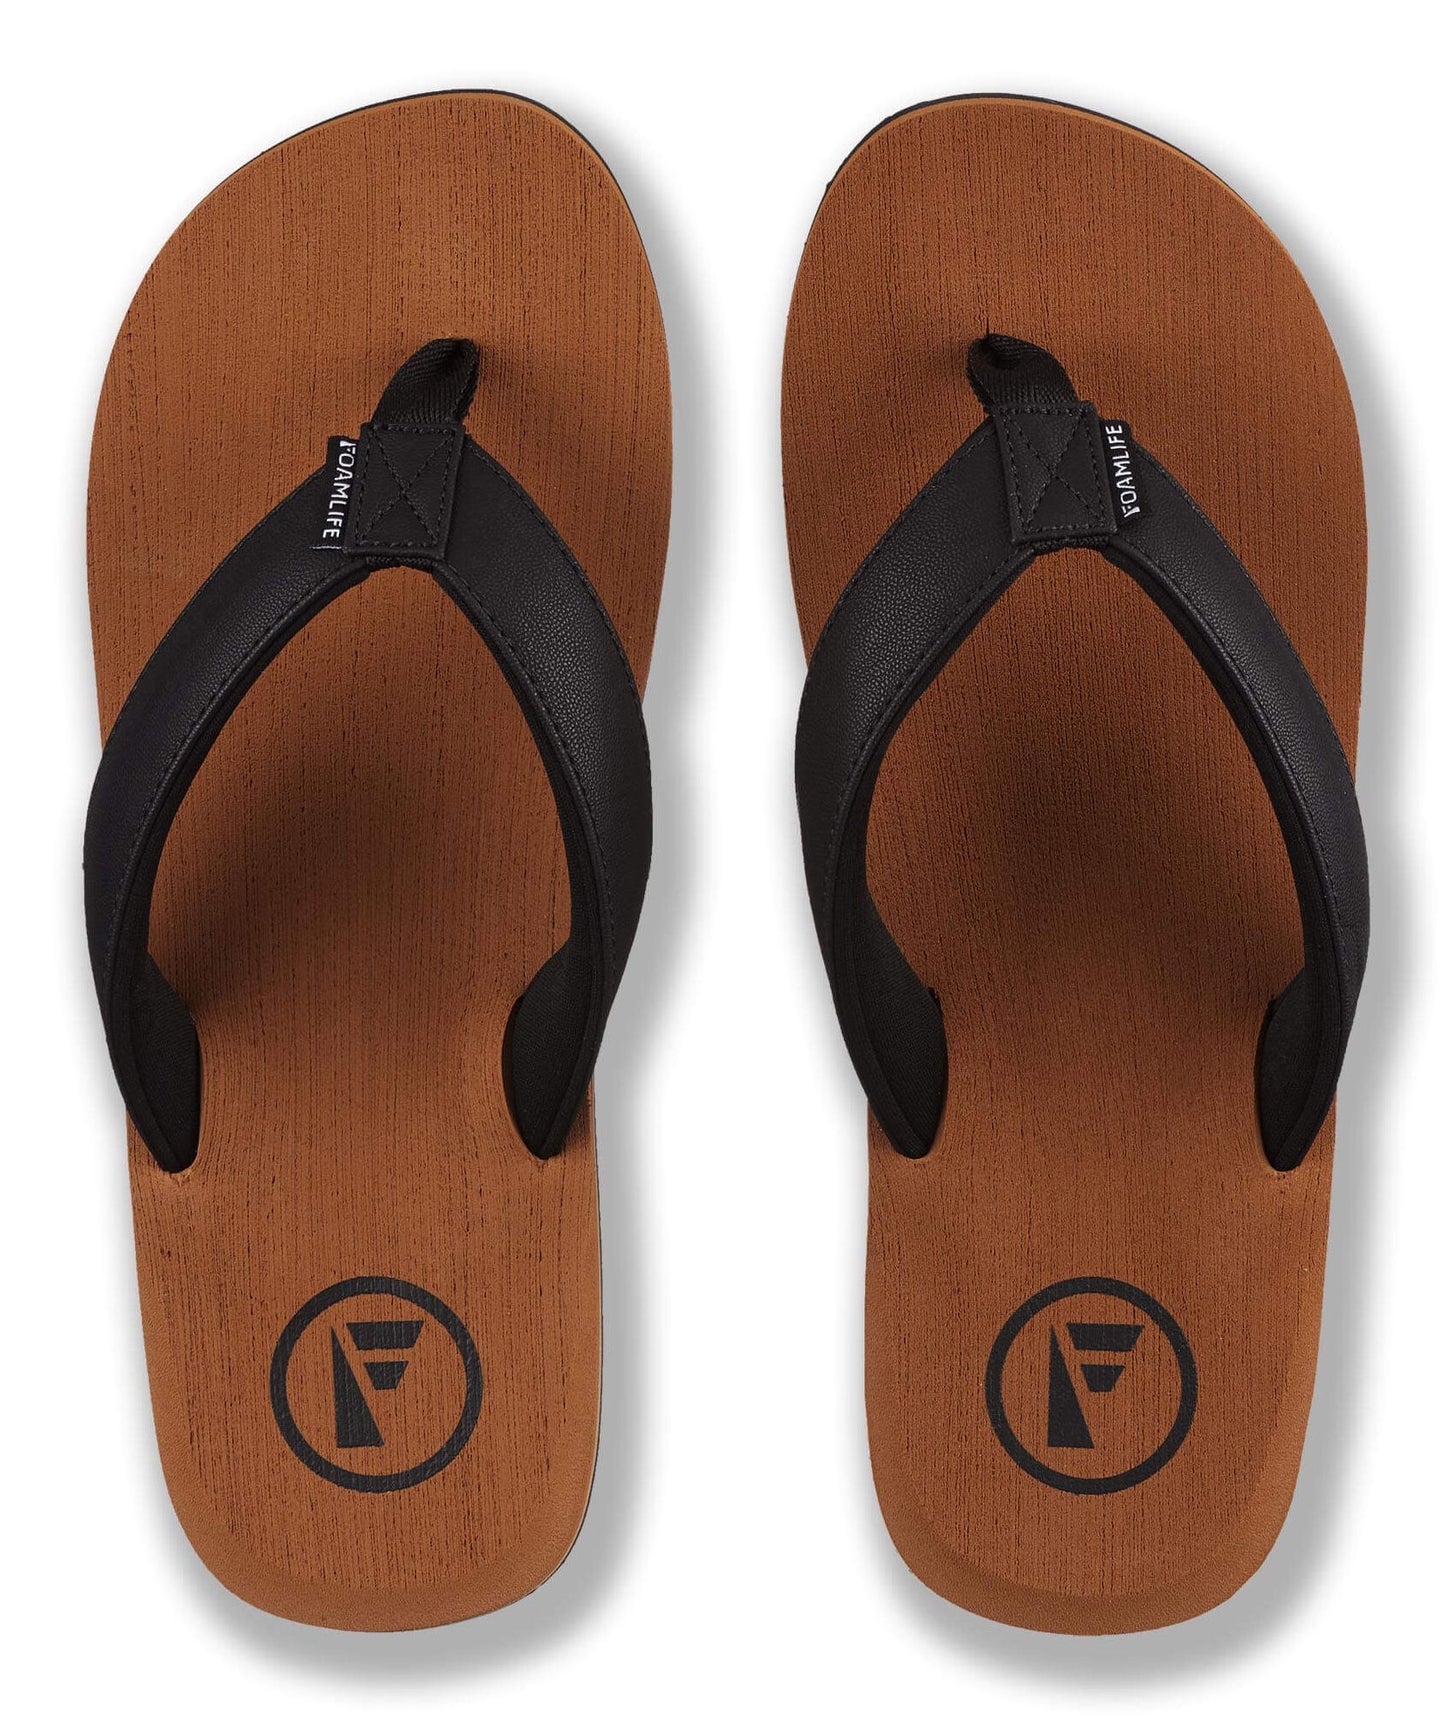 Foamlife Mens 'Seales' Flip Flops - Tan